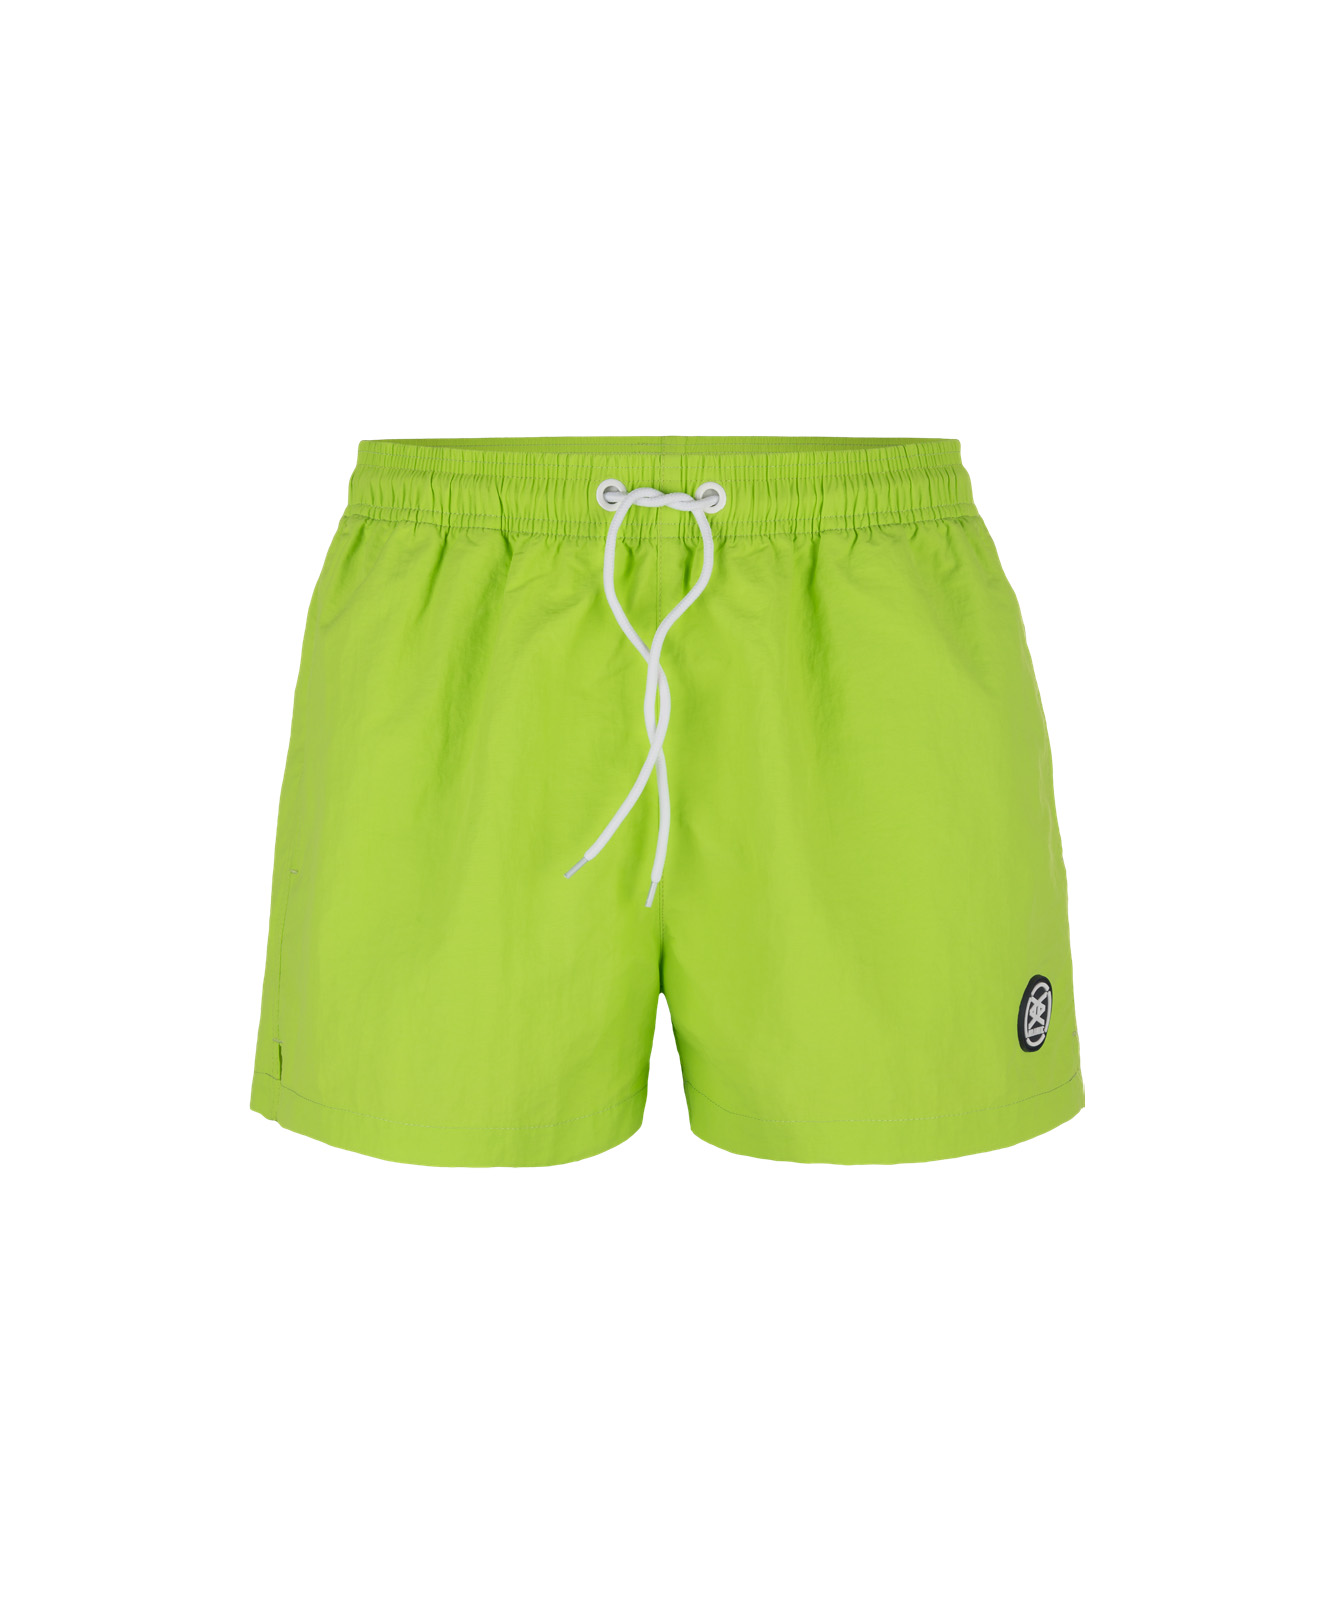 Men's Beach Shorts ATLANTIC - green